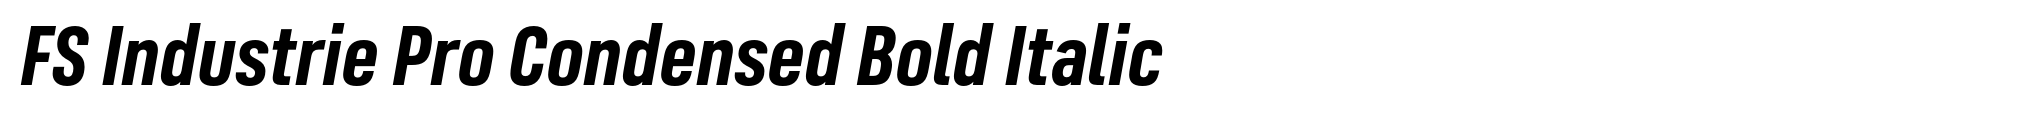 FS Industrie Pro Condensed Bold Italic image